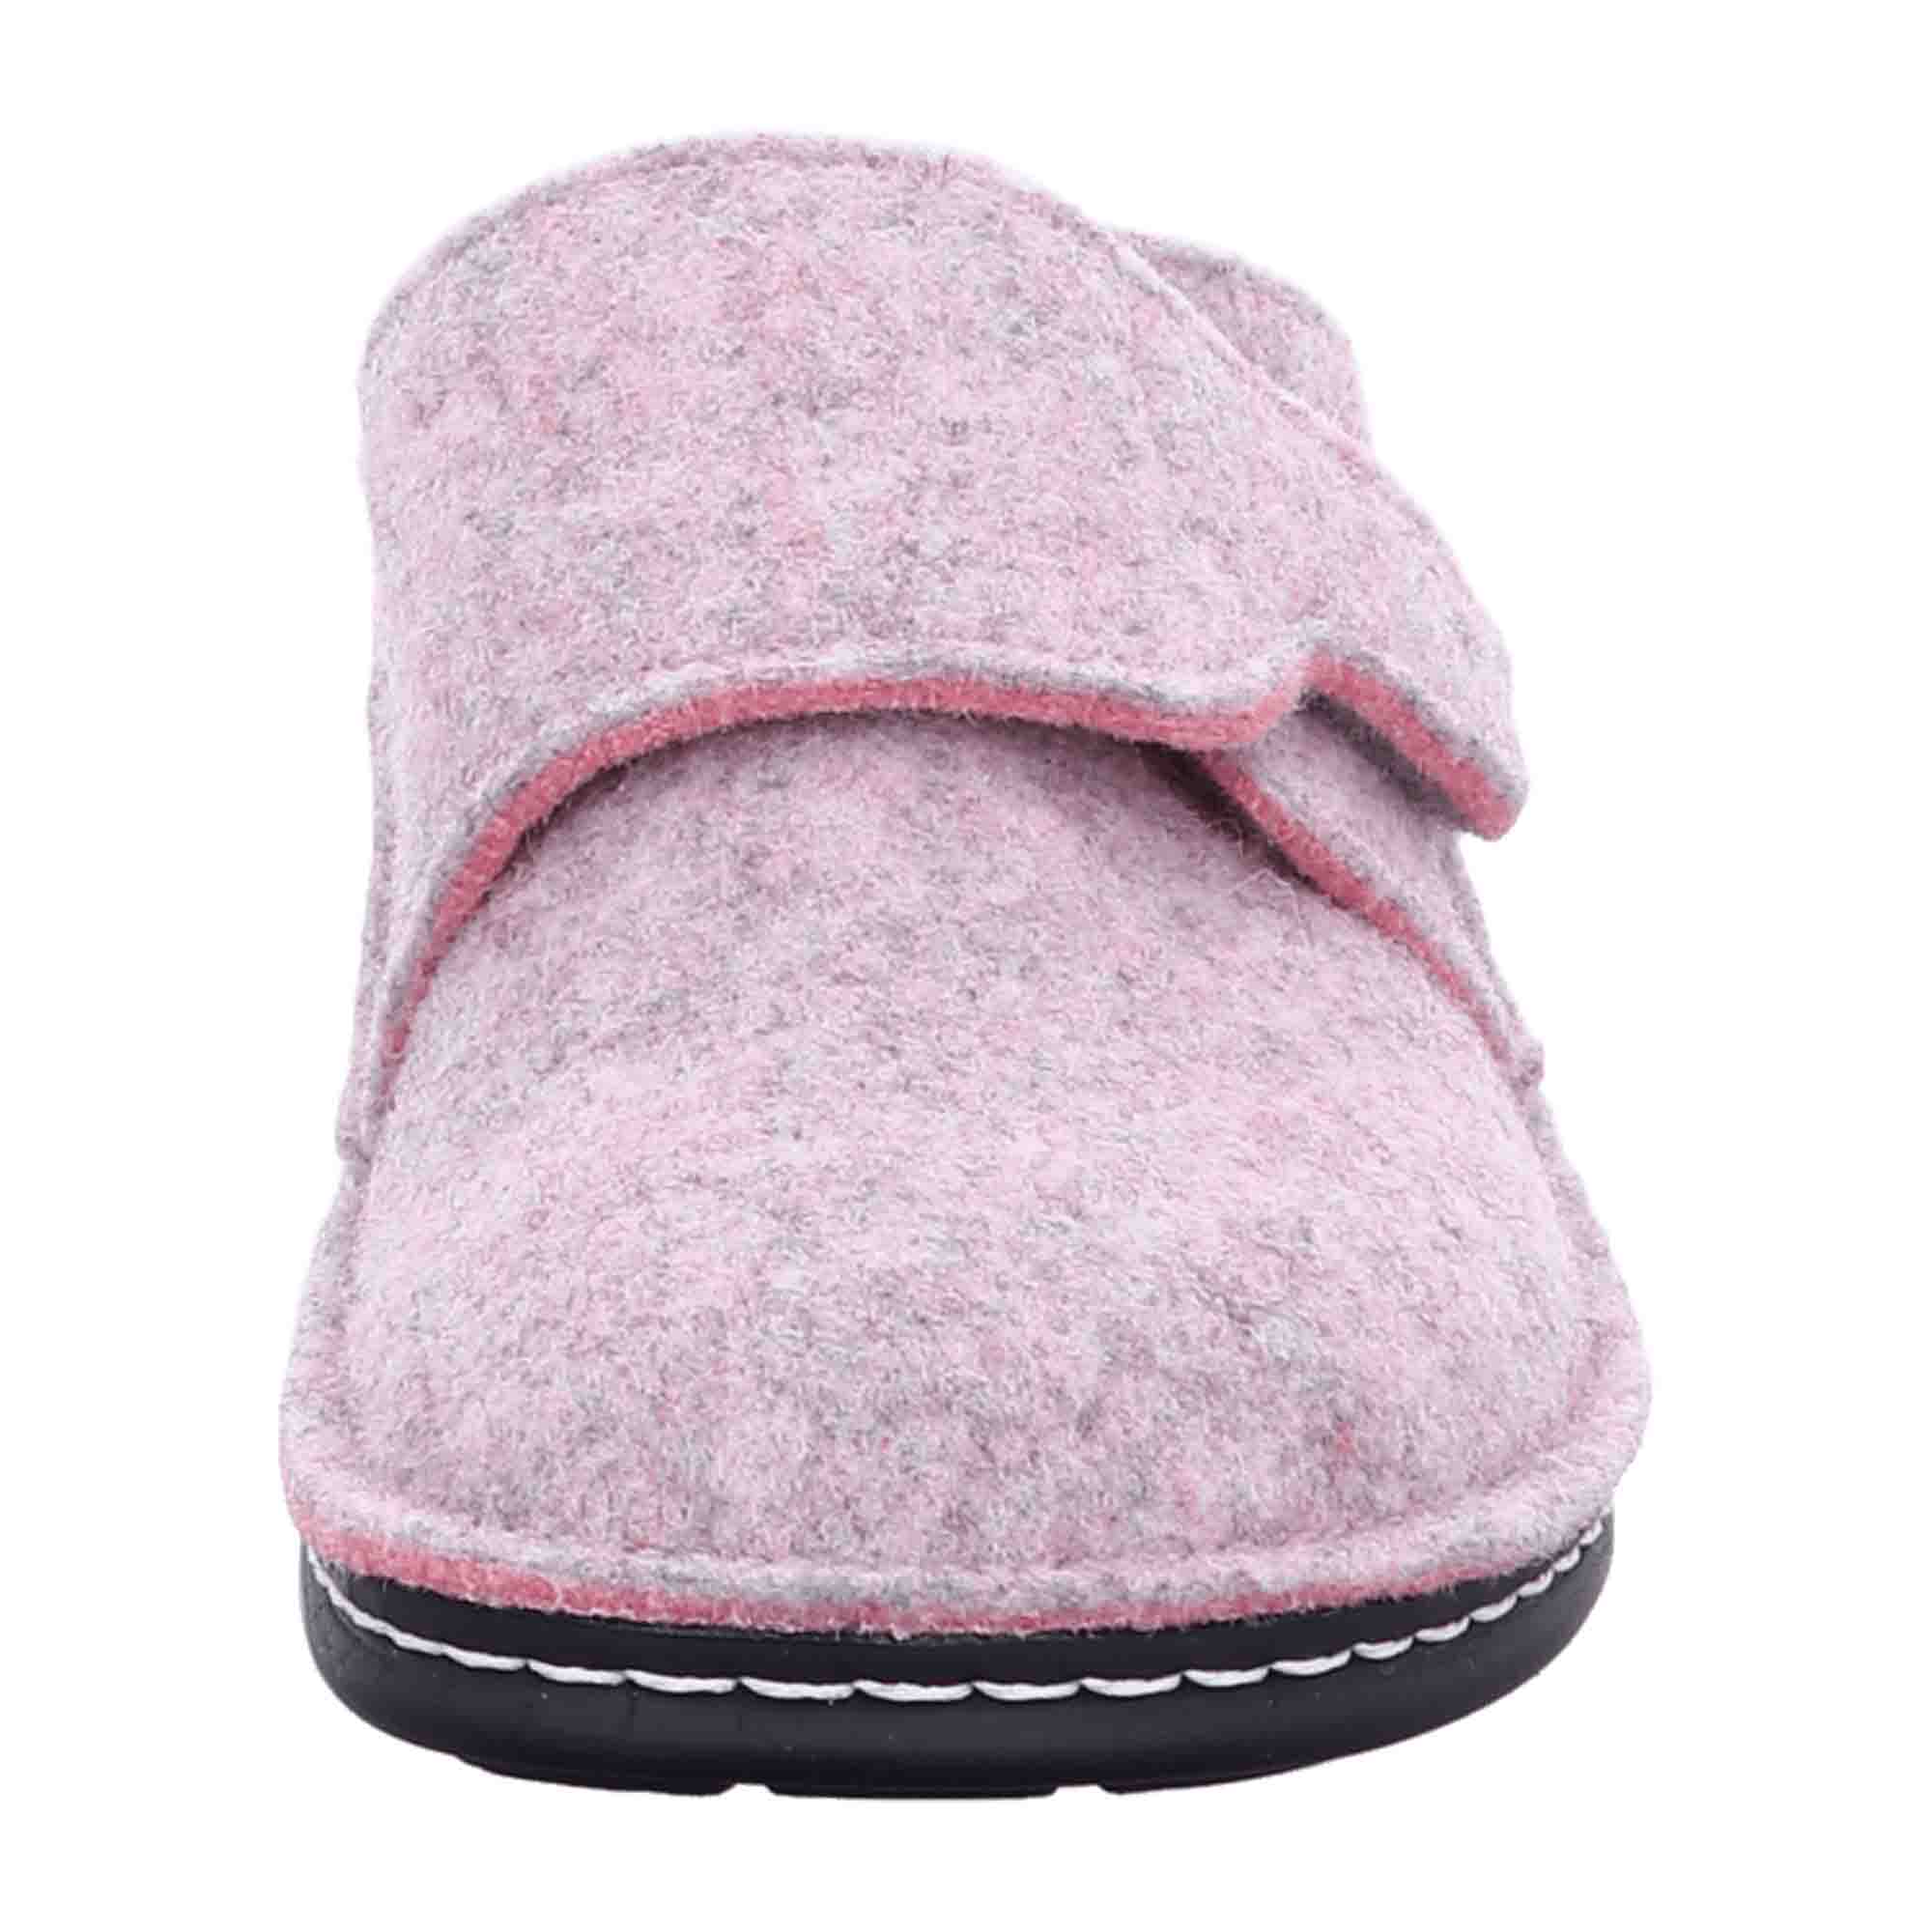 Finn Comfort Goms Women's Comfort Shoes, Stylish Pink